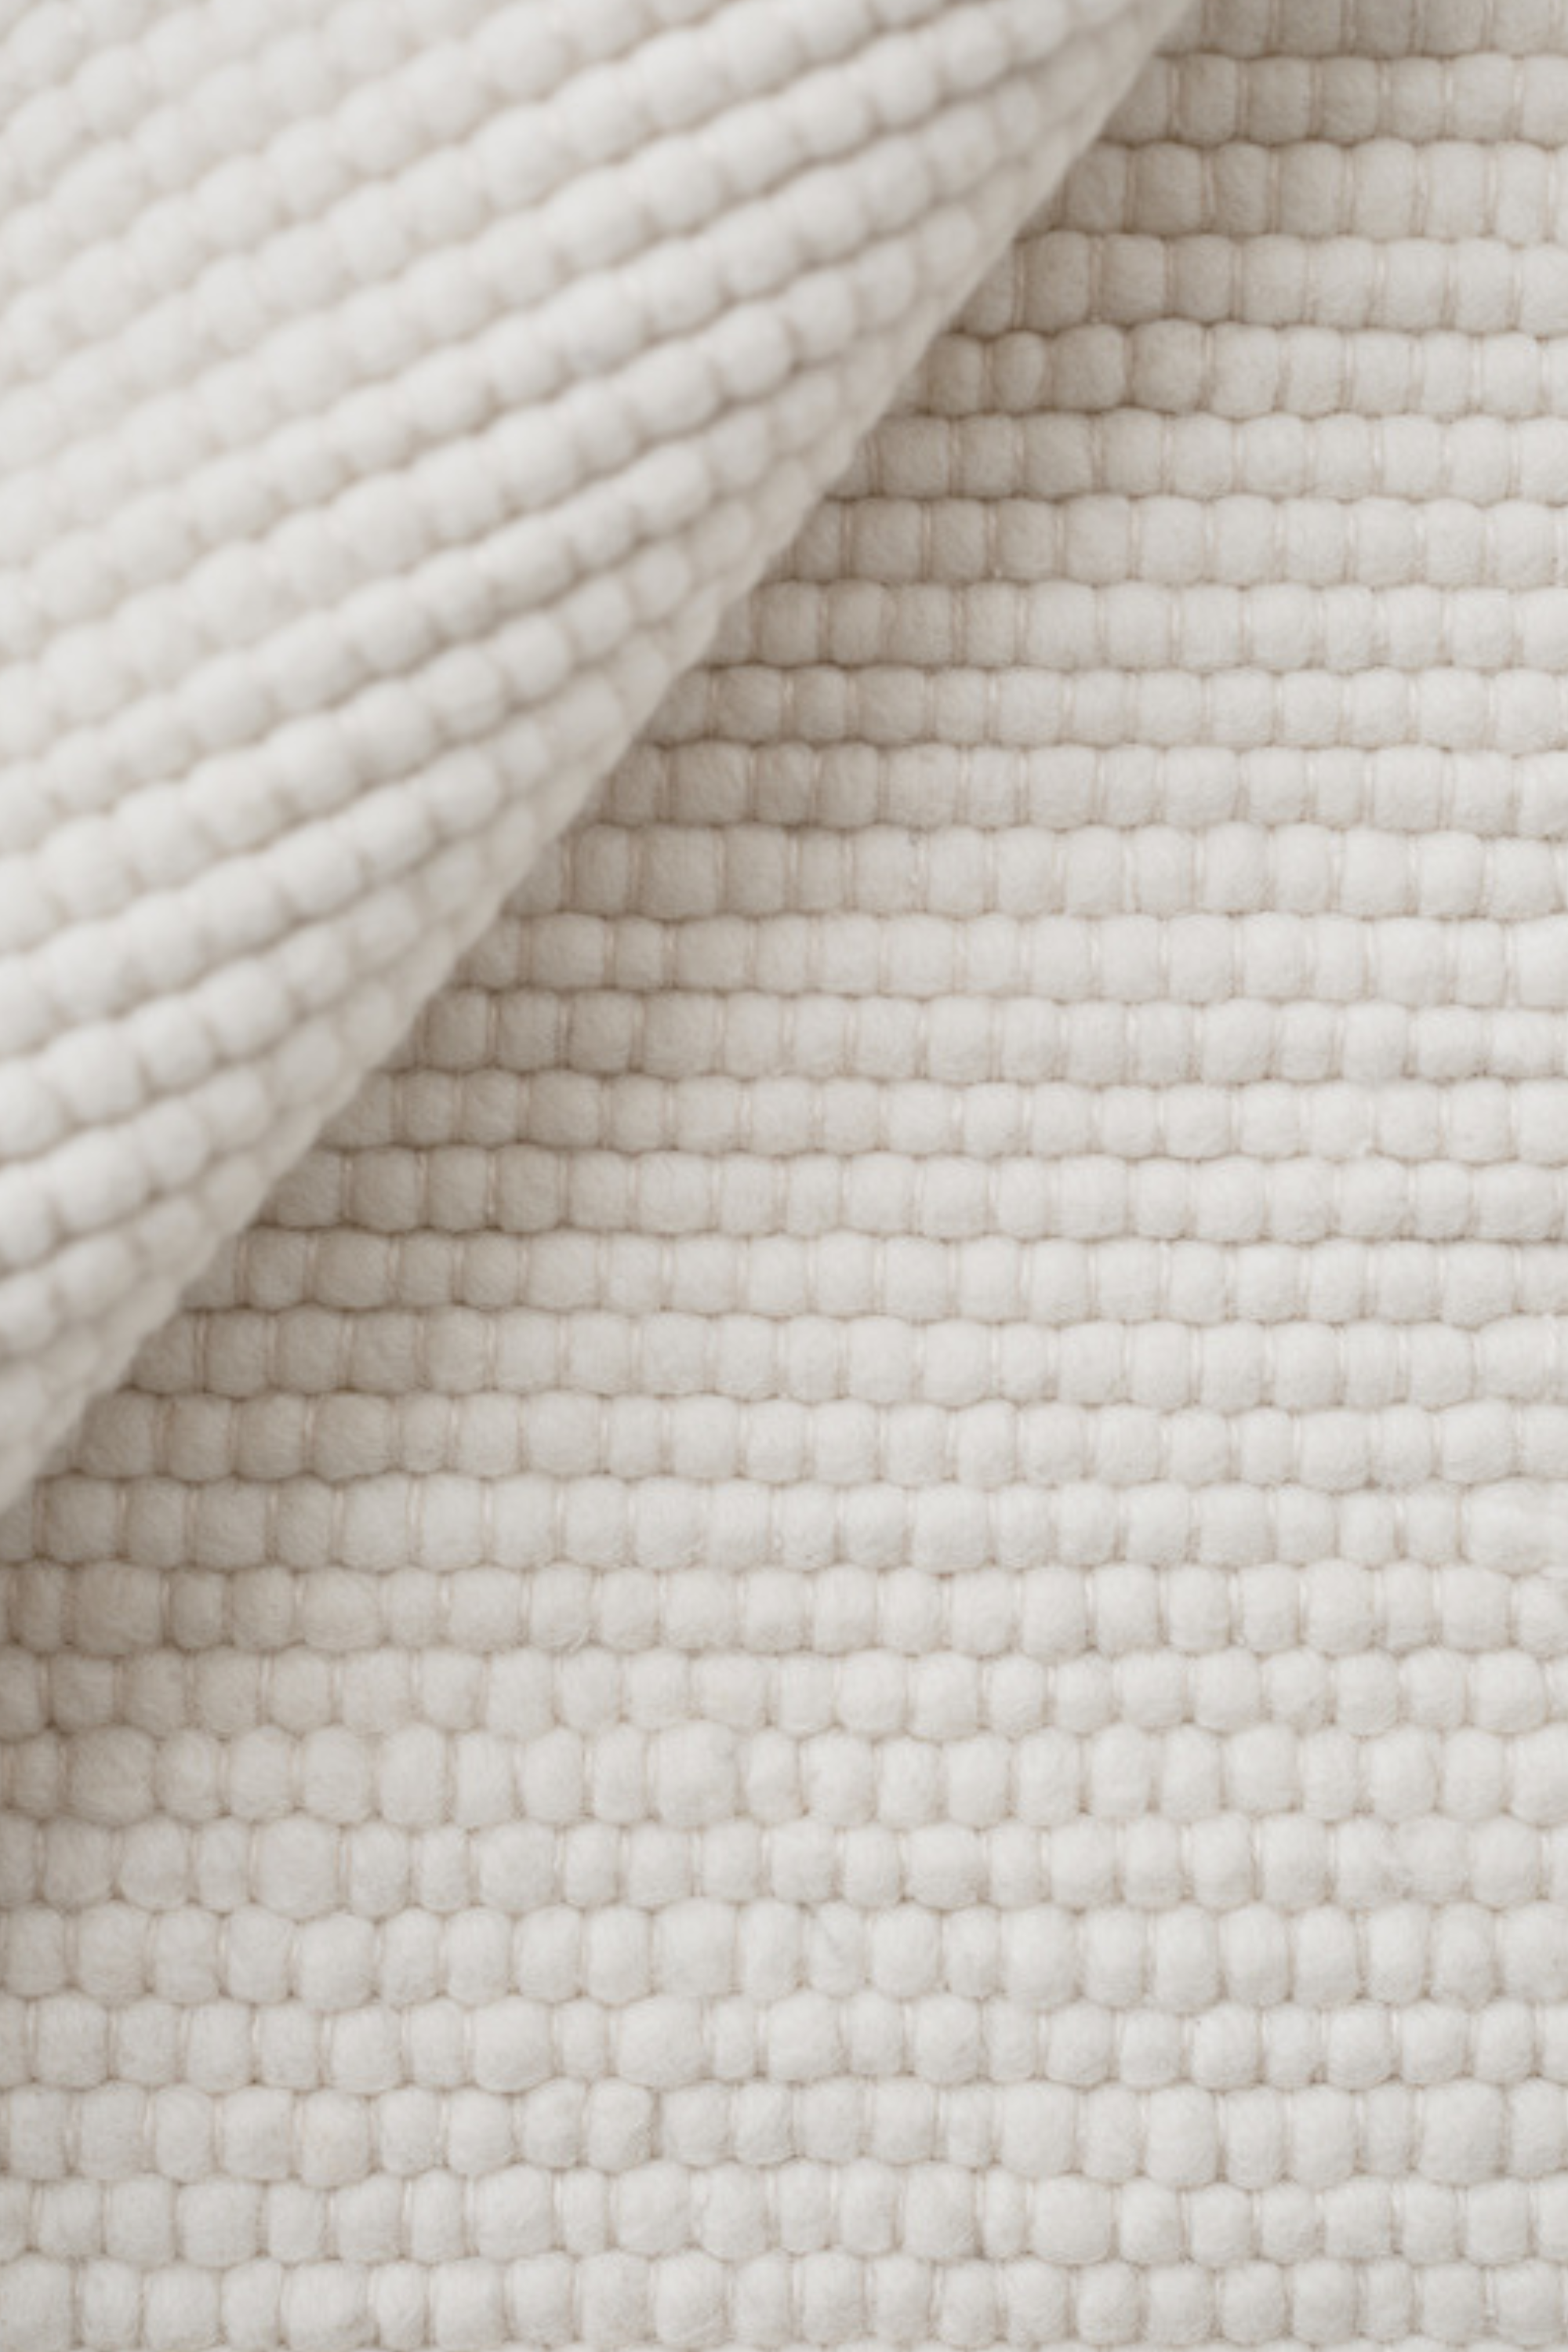 White textured woven rug